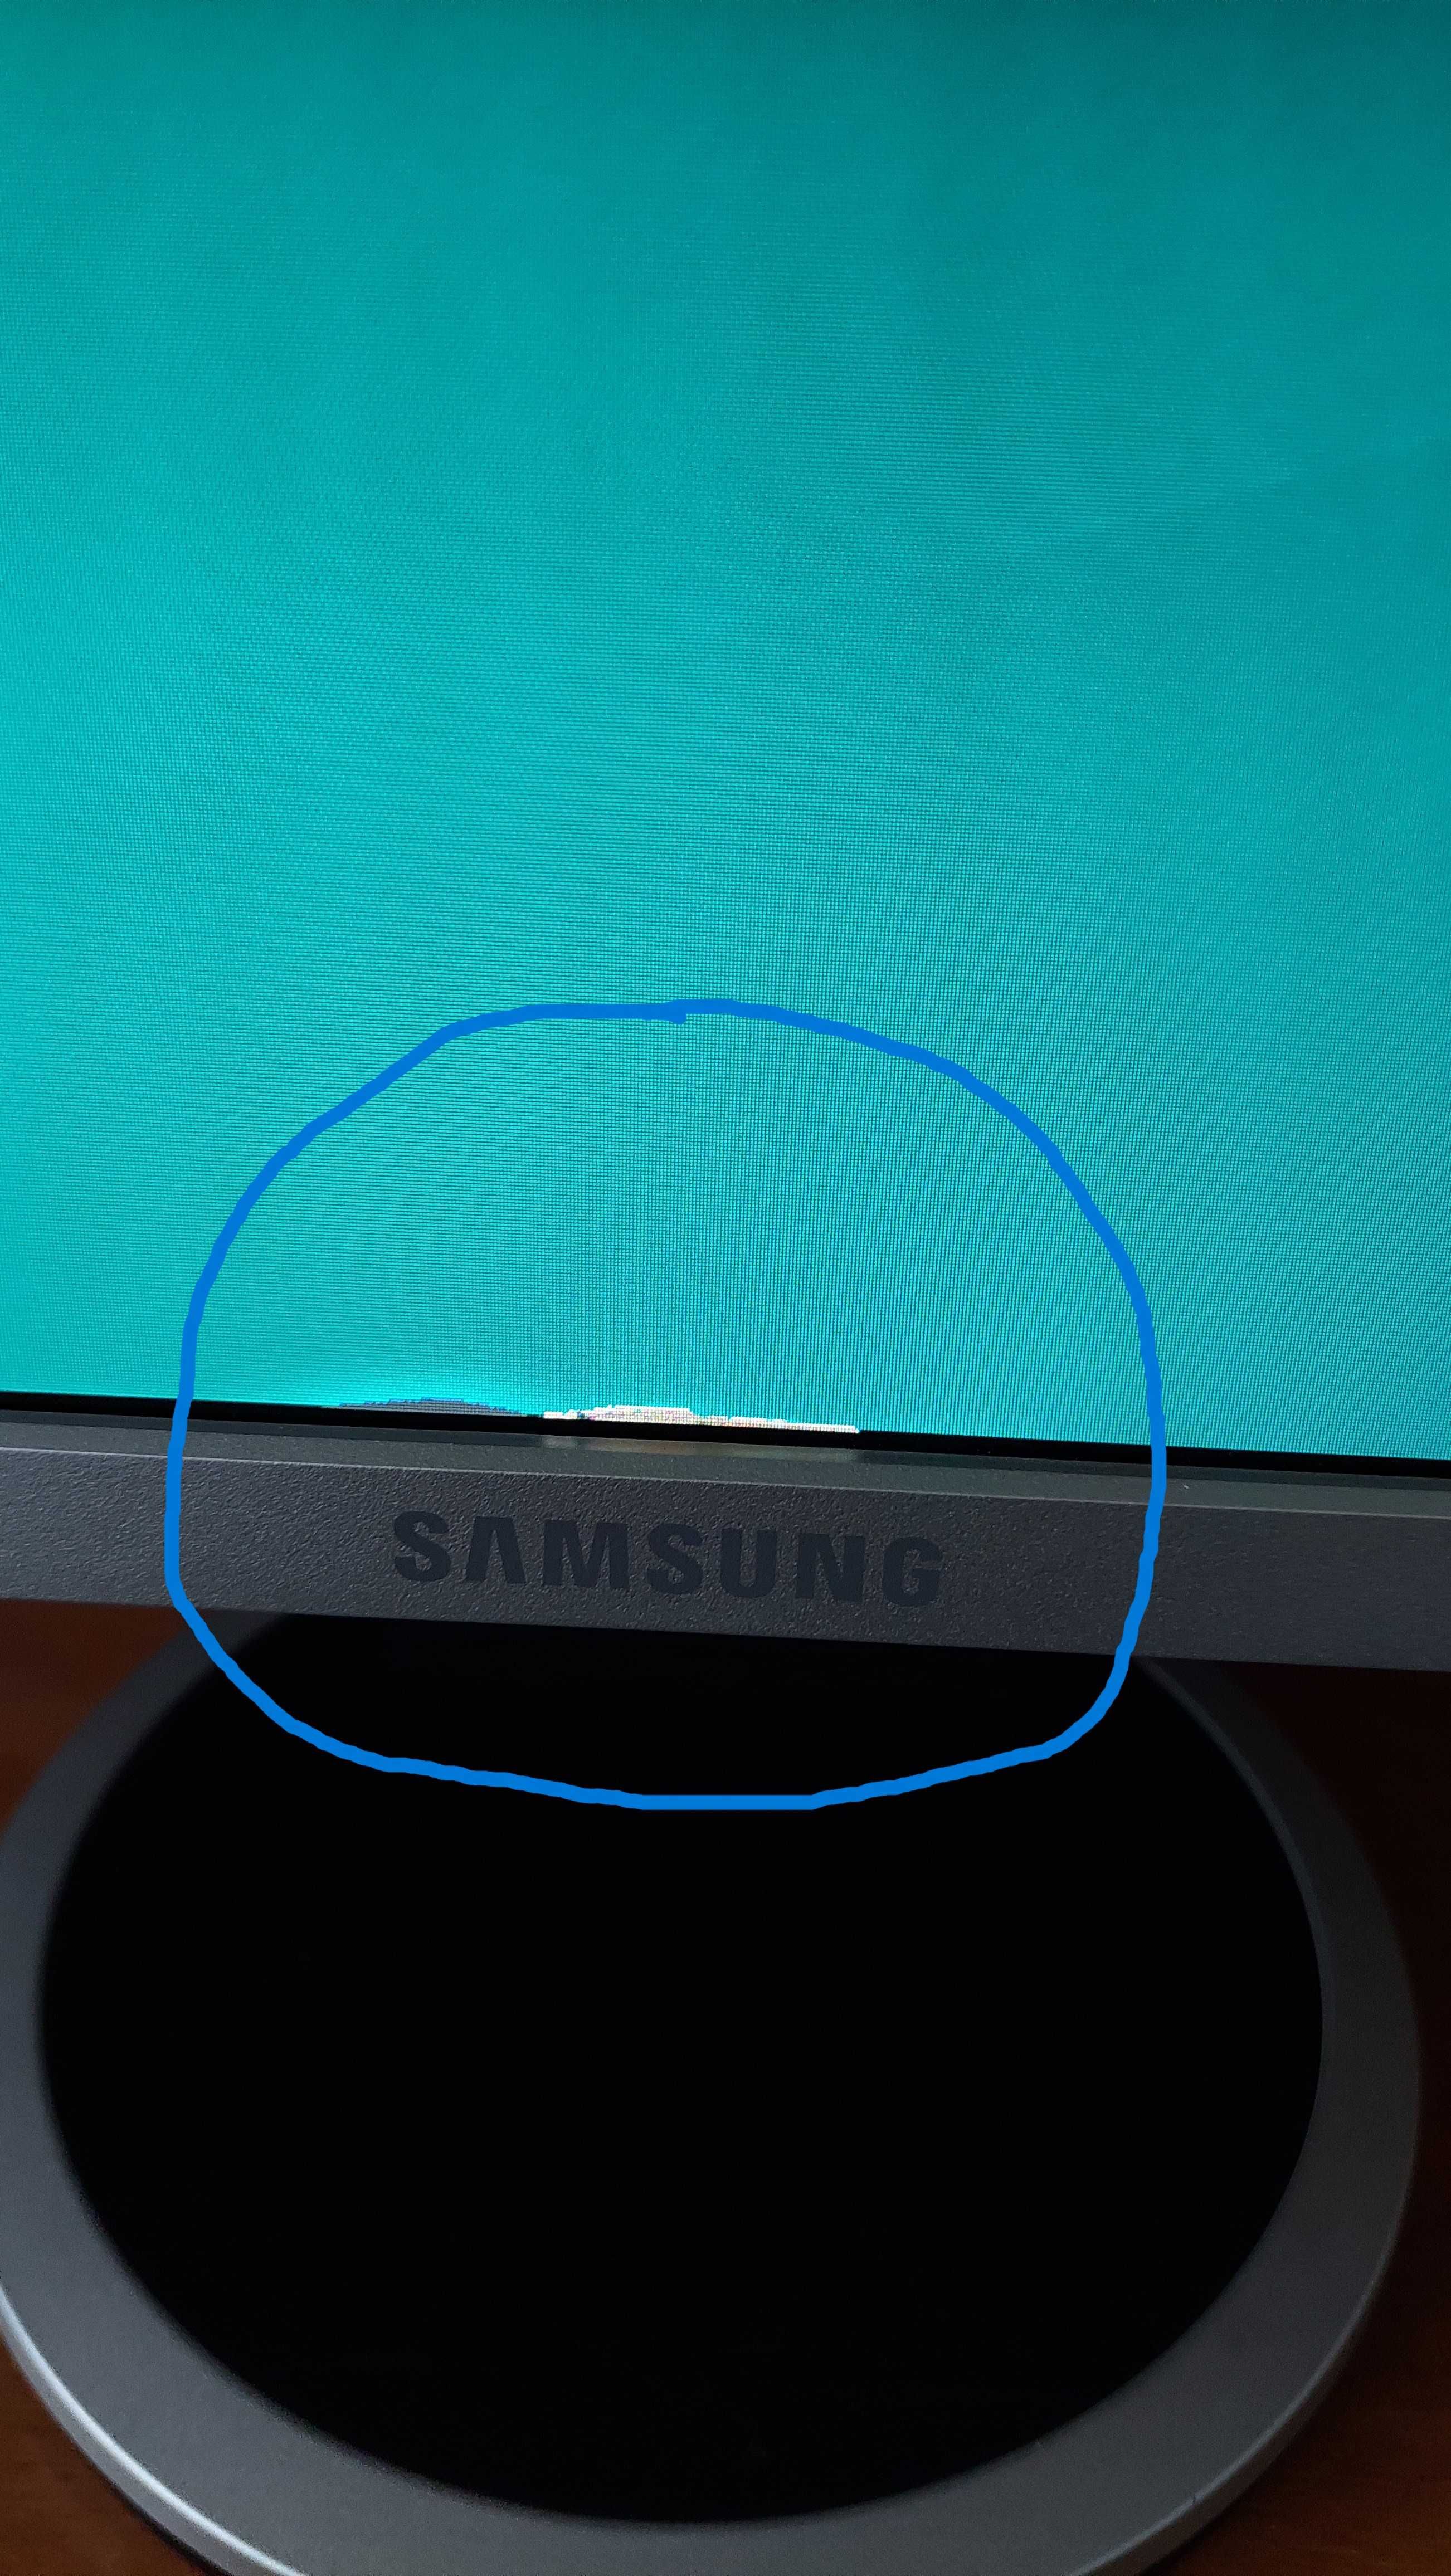 Monitor Samsung SyncMaster 940n (VGA, 1280x1024, 60Hz)